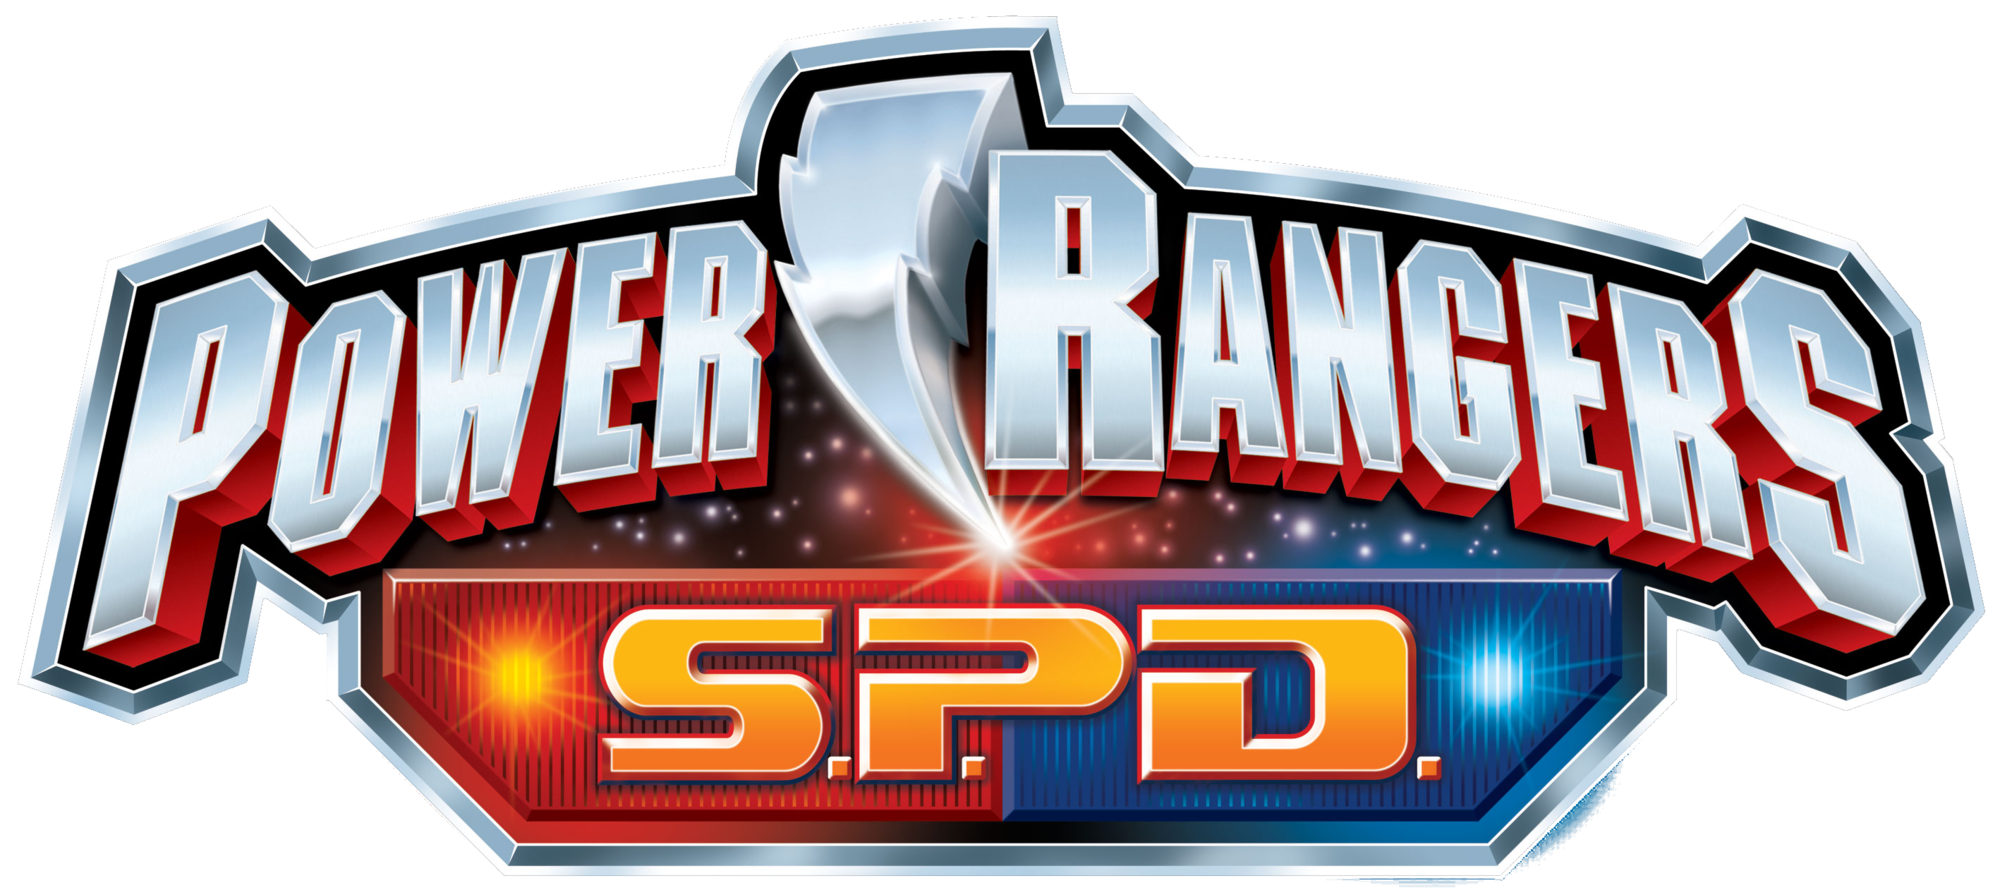 Logo Brand Spd Power Rangers Free HD Image PNG Image